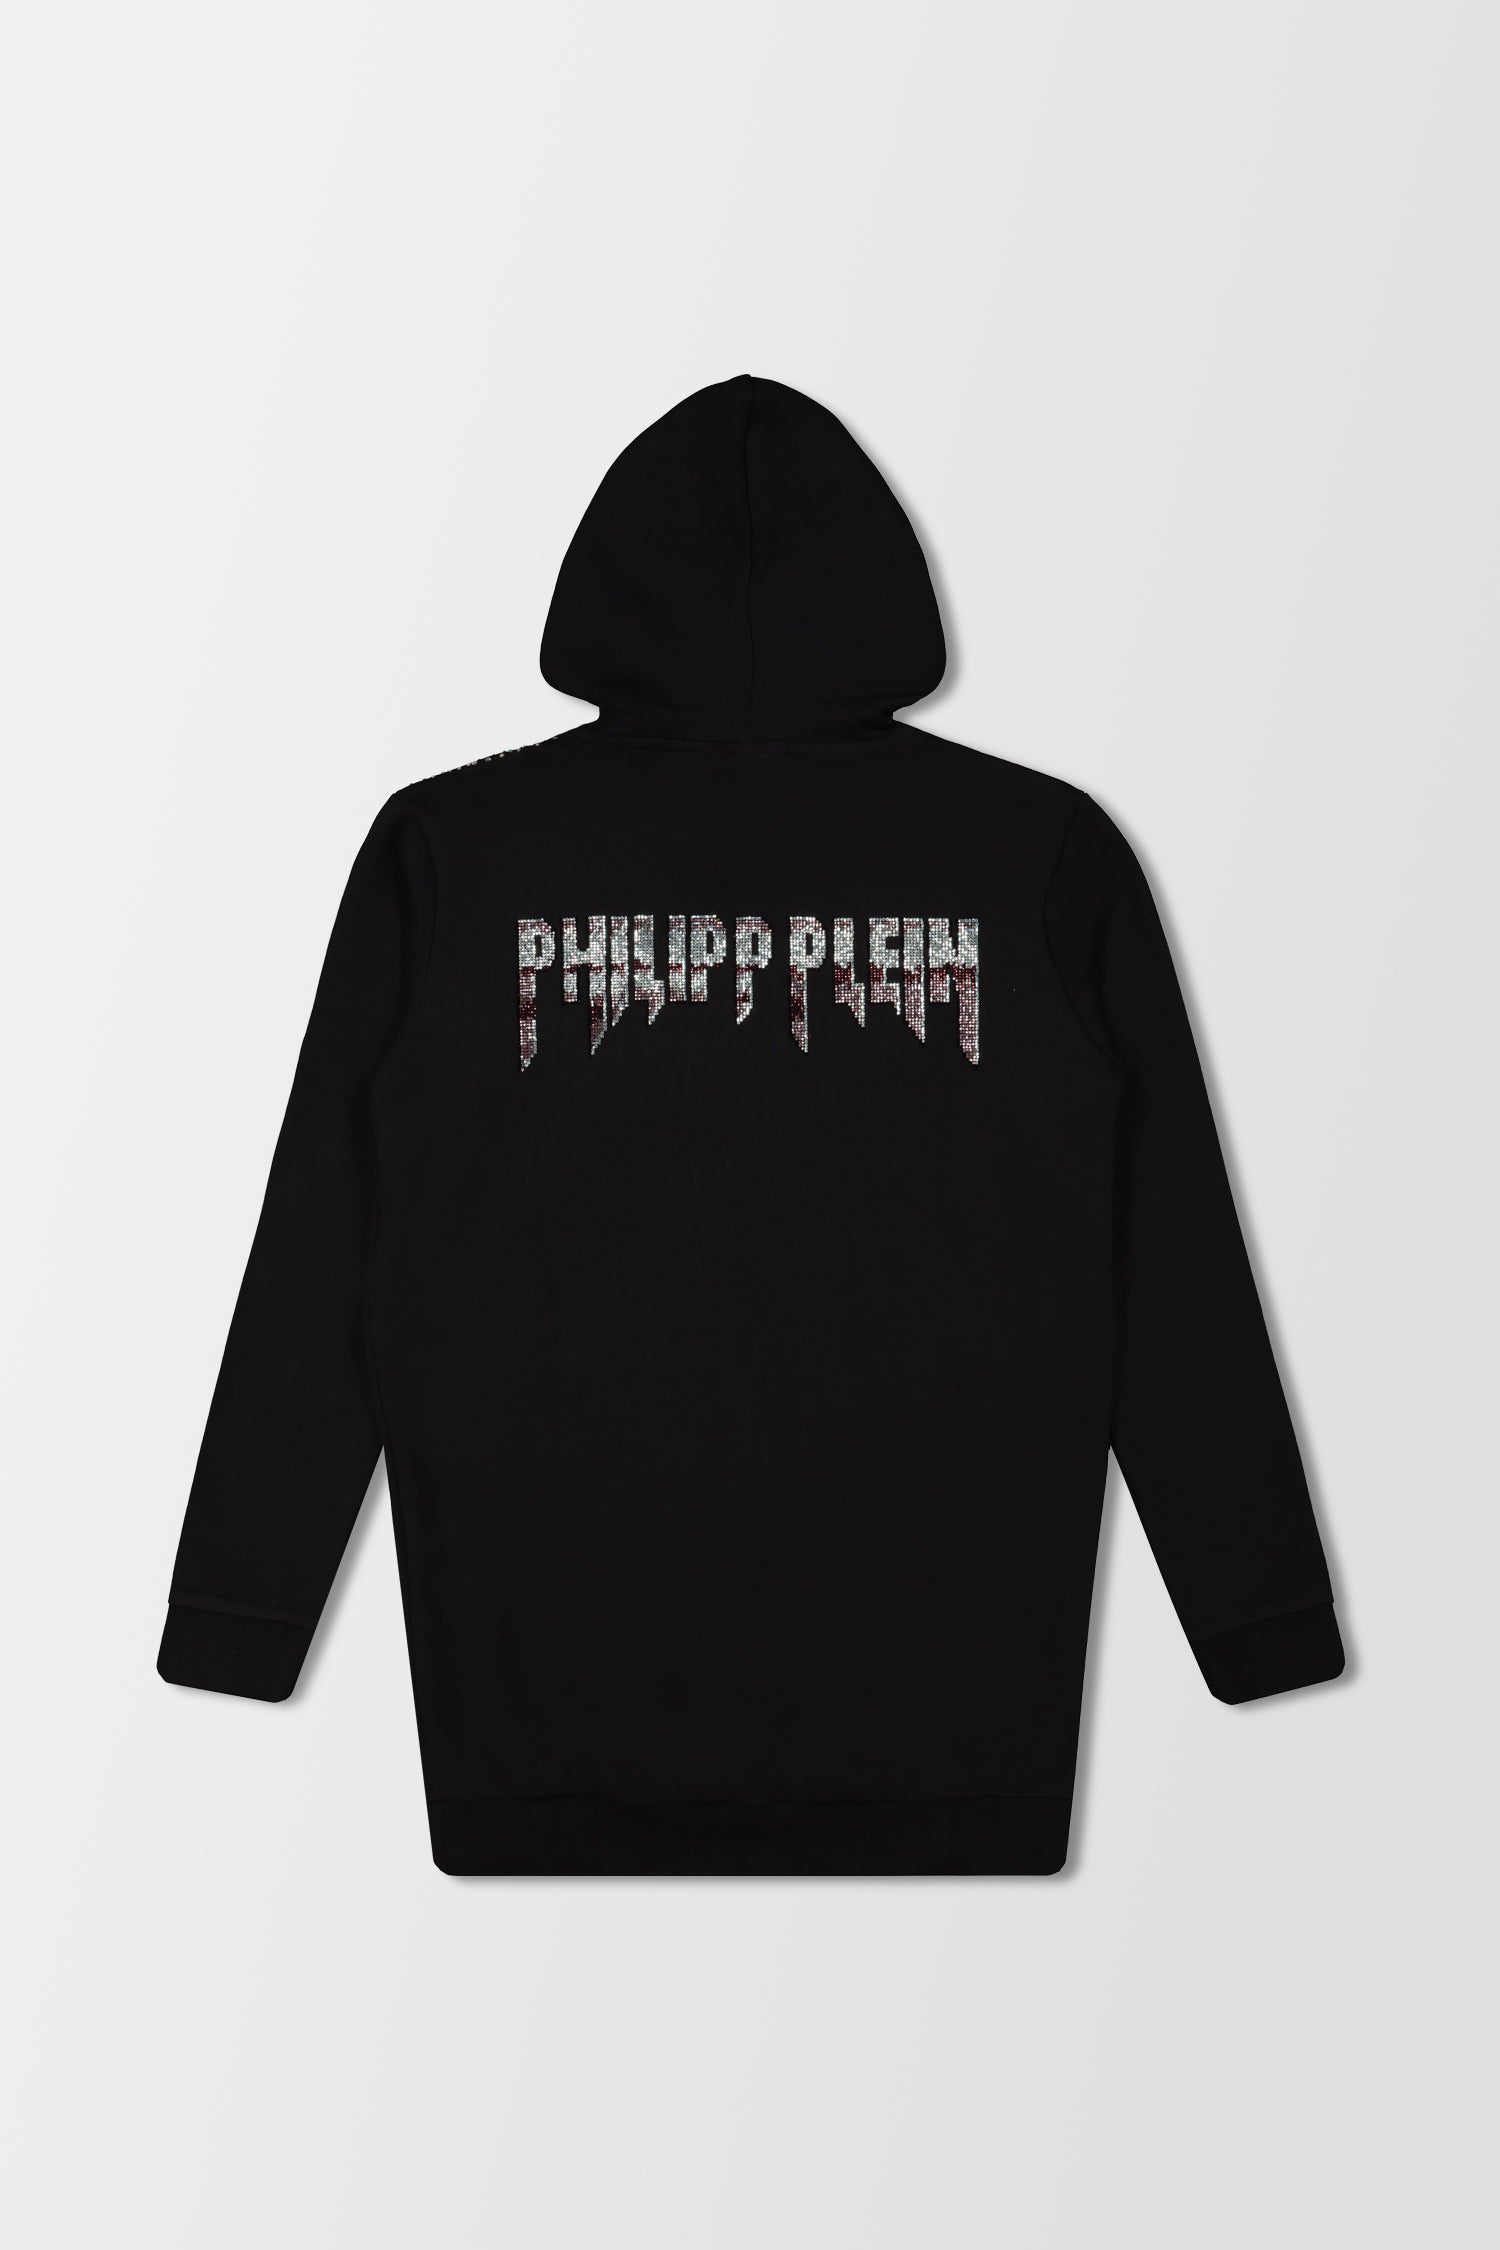 Philipp Plein Black Rock B Dress Hoodie